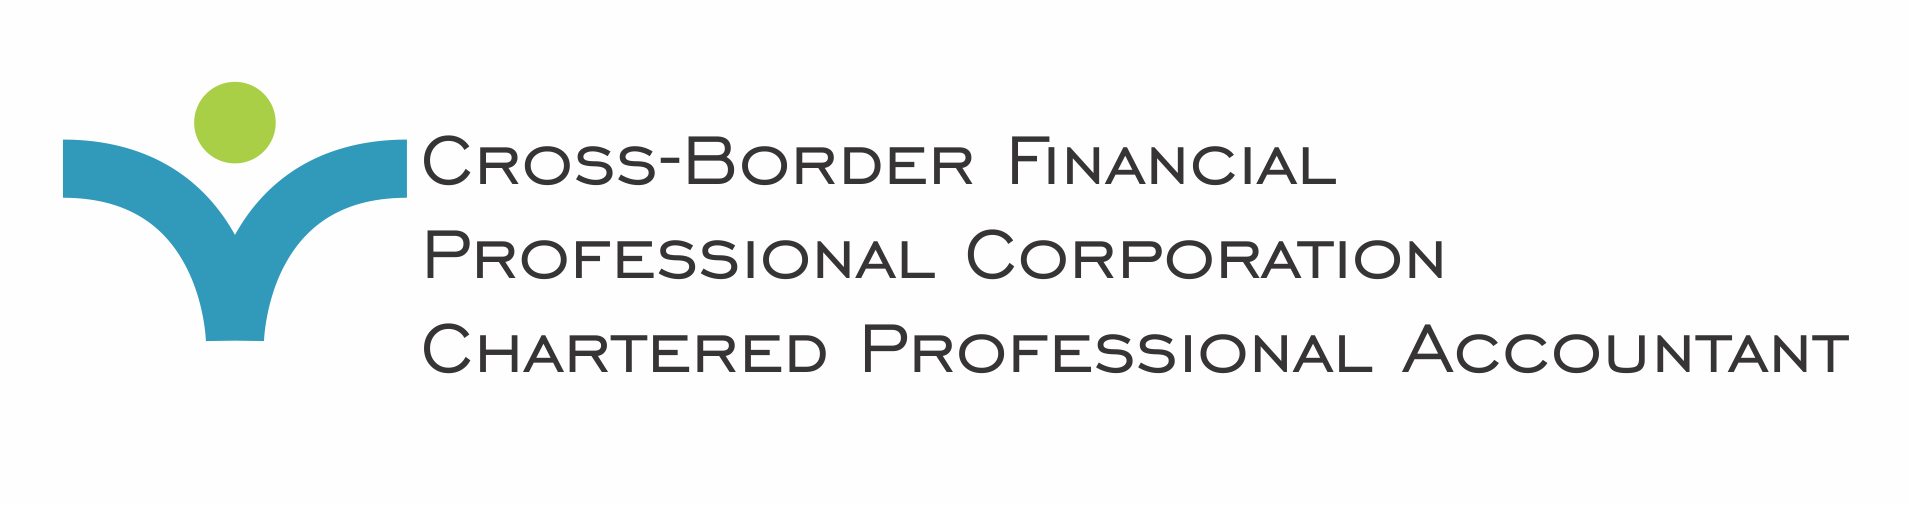 US & Canadian Cross-Border Tax Service – Cross-Border Financial Professional Corporation